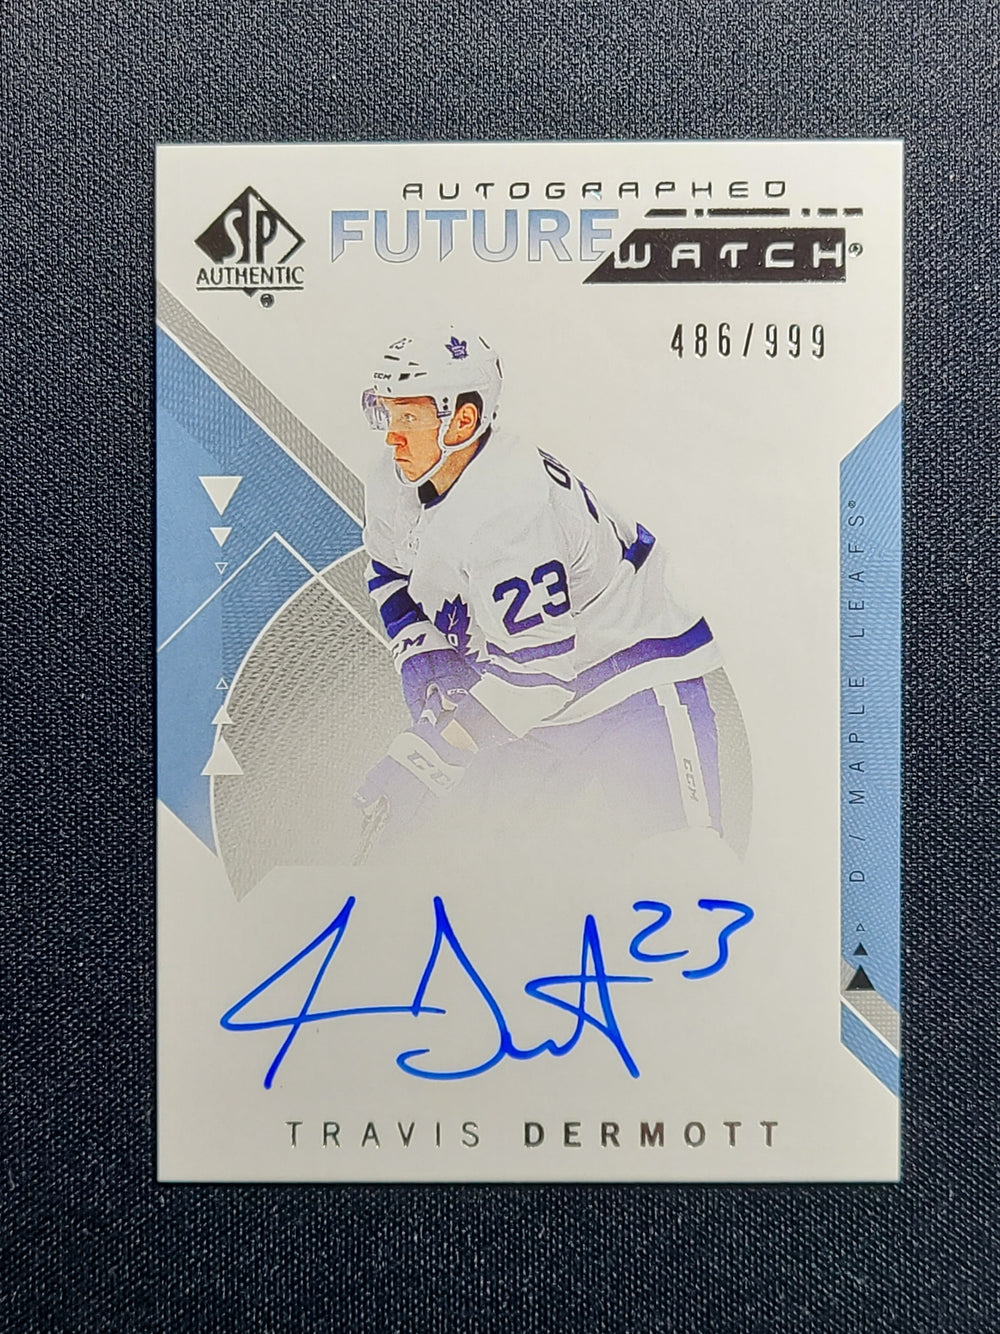 2018-19 SP Authentic Future Watch Auto #174 Travis Dermott Toronto Maple Leafs 486/999